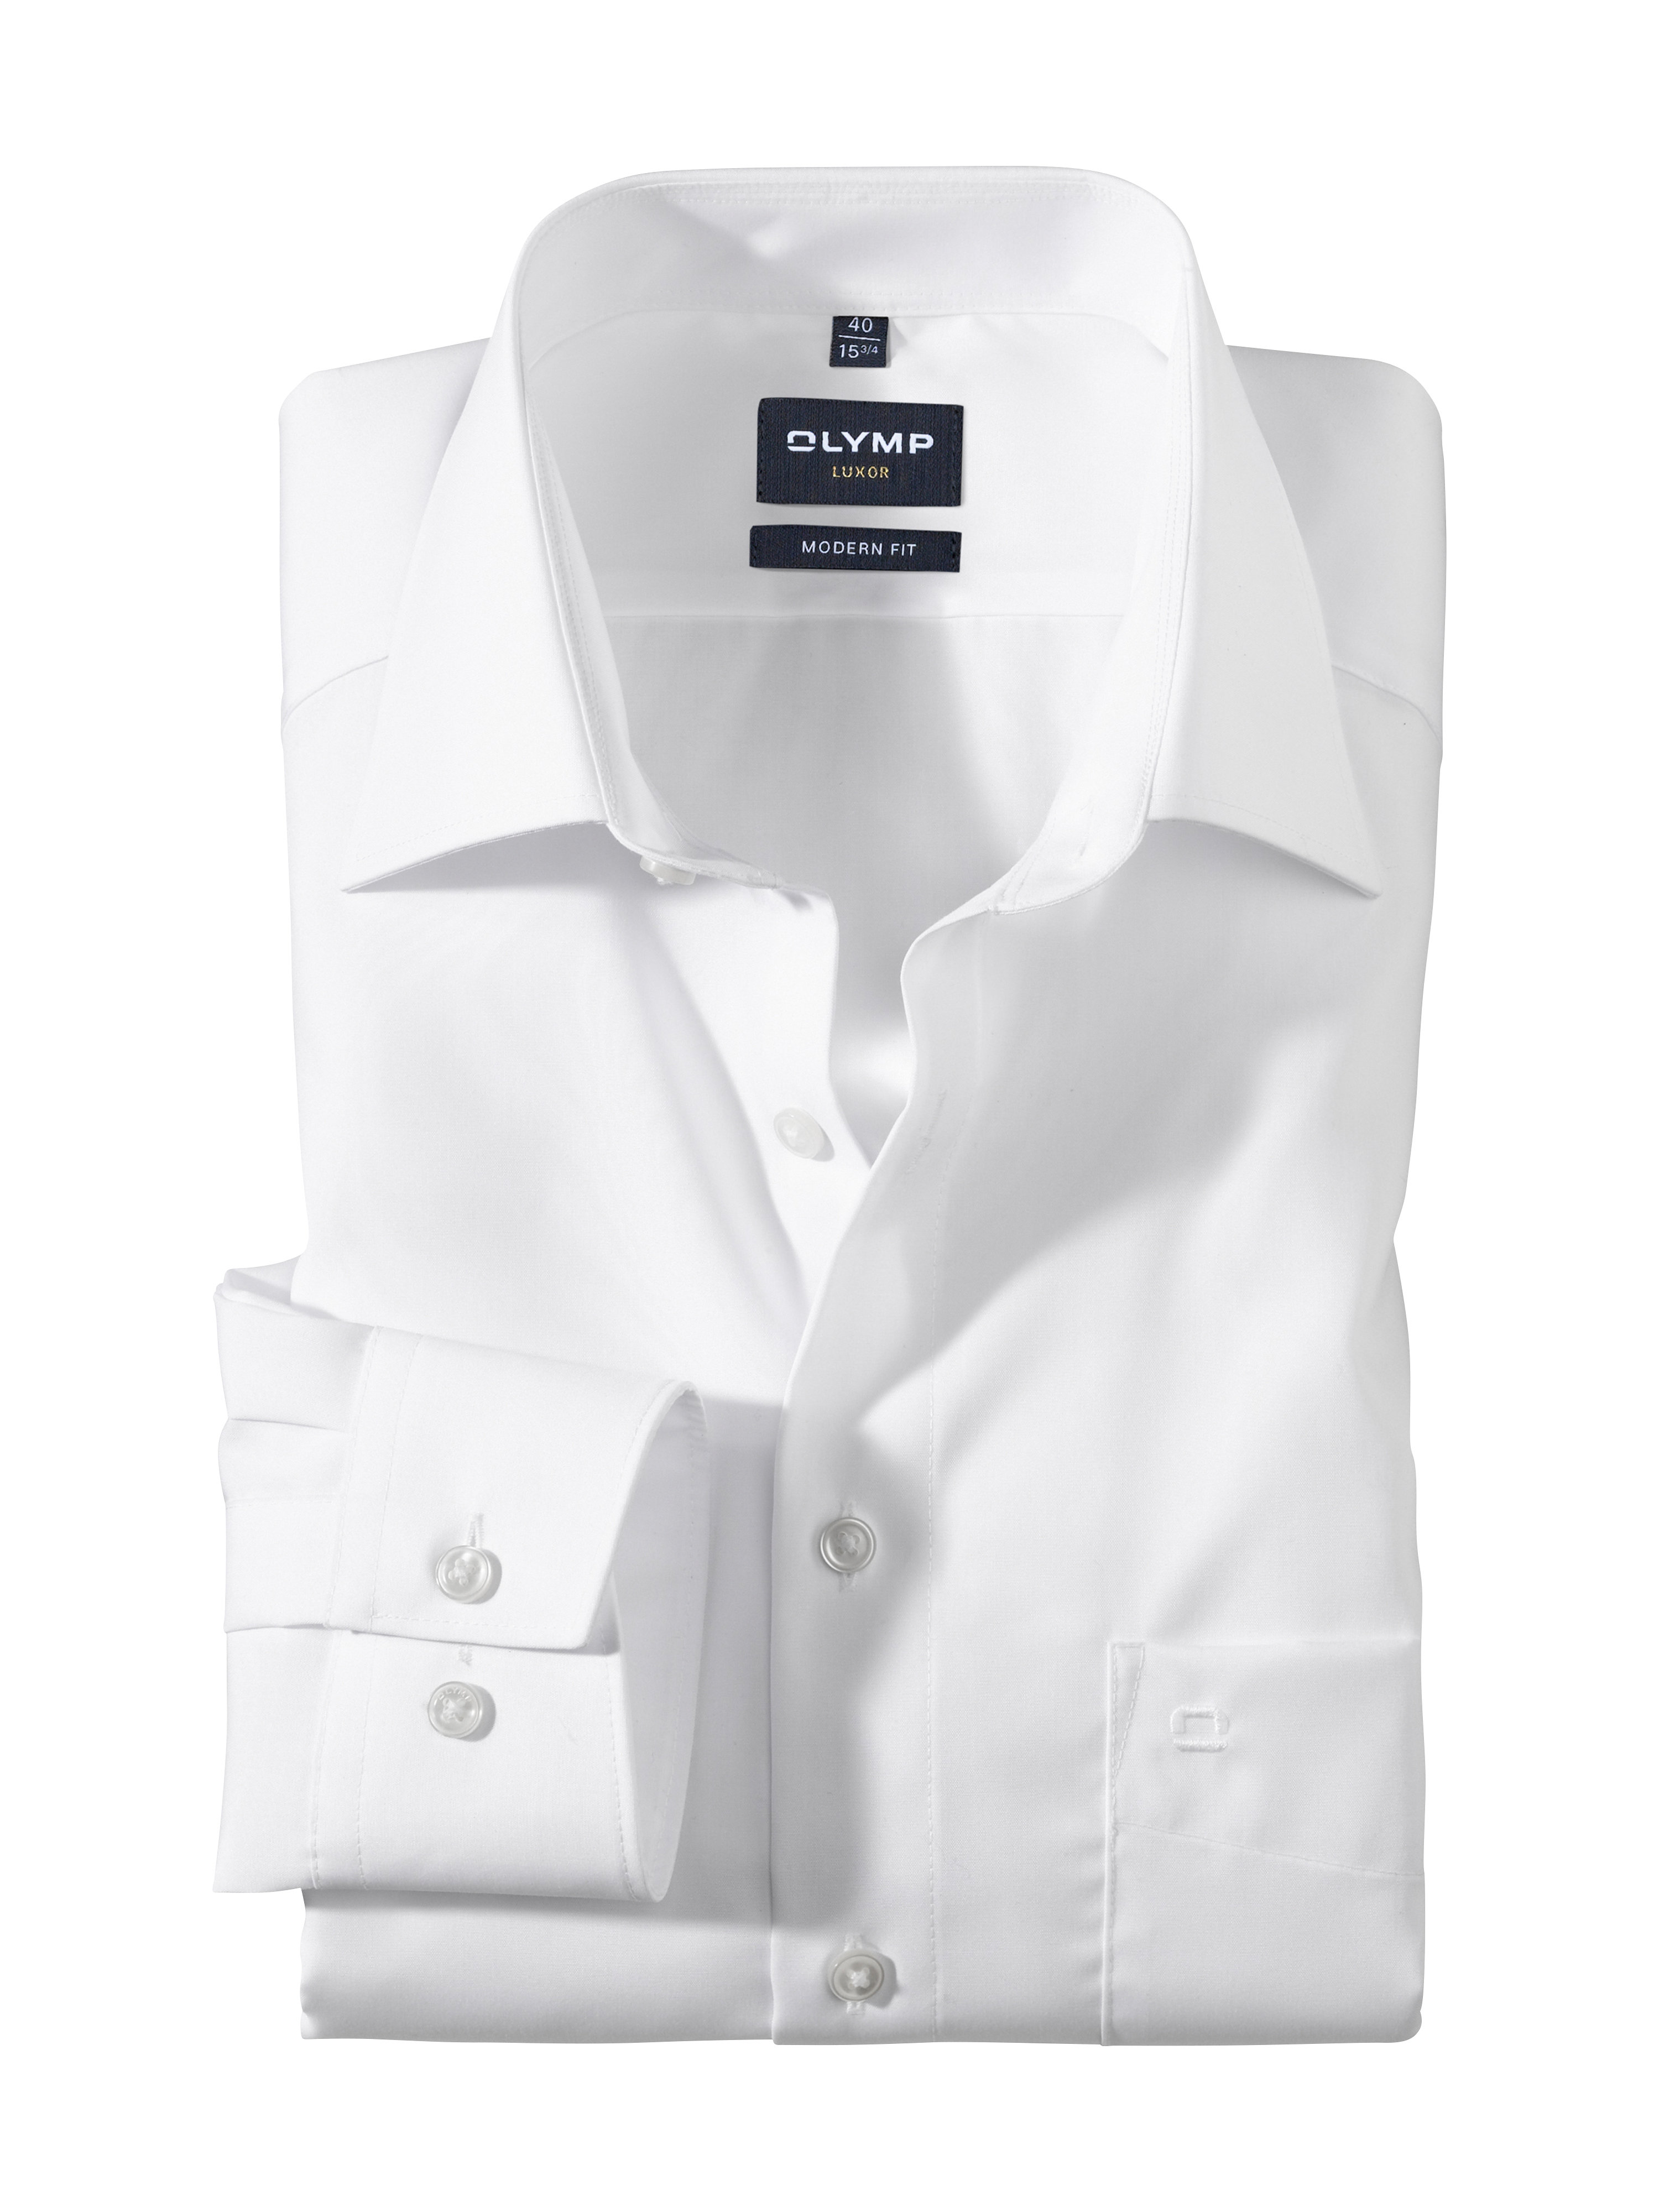 New Businesshemd | modern Weiß fit, OLYMP Luxor, | Kent 03006400 -